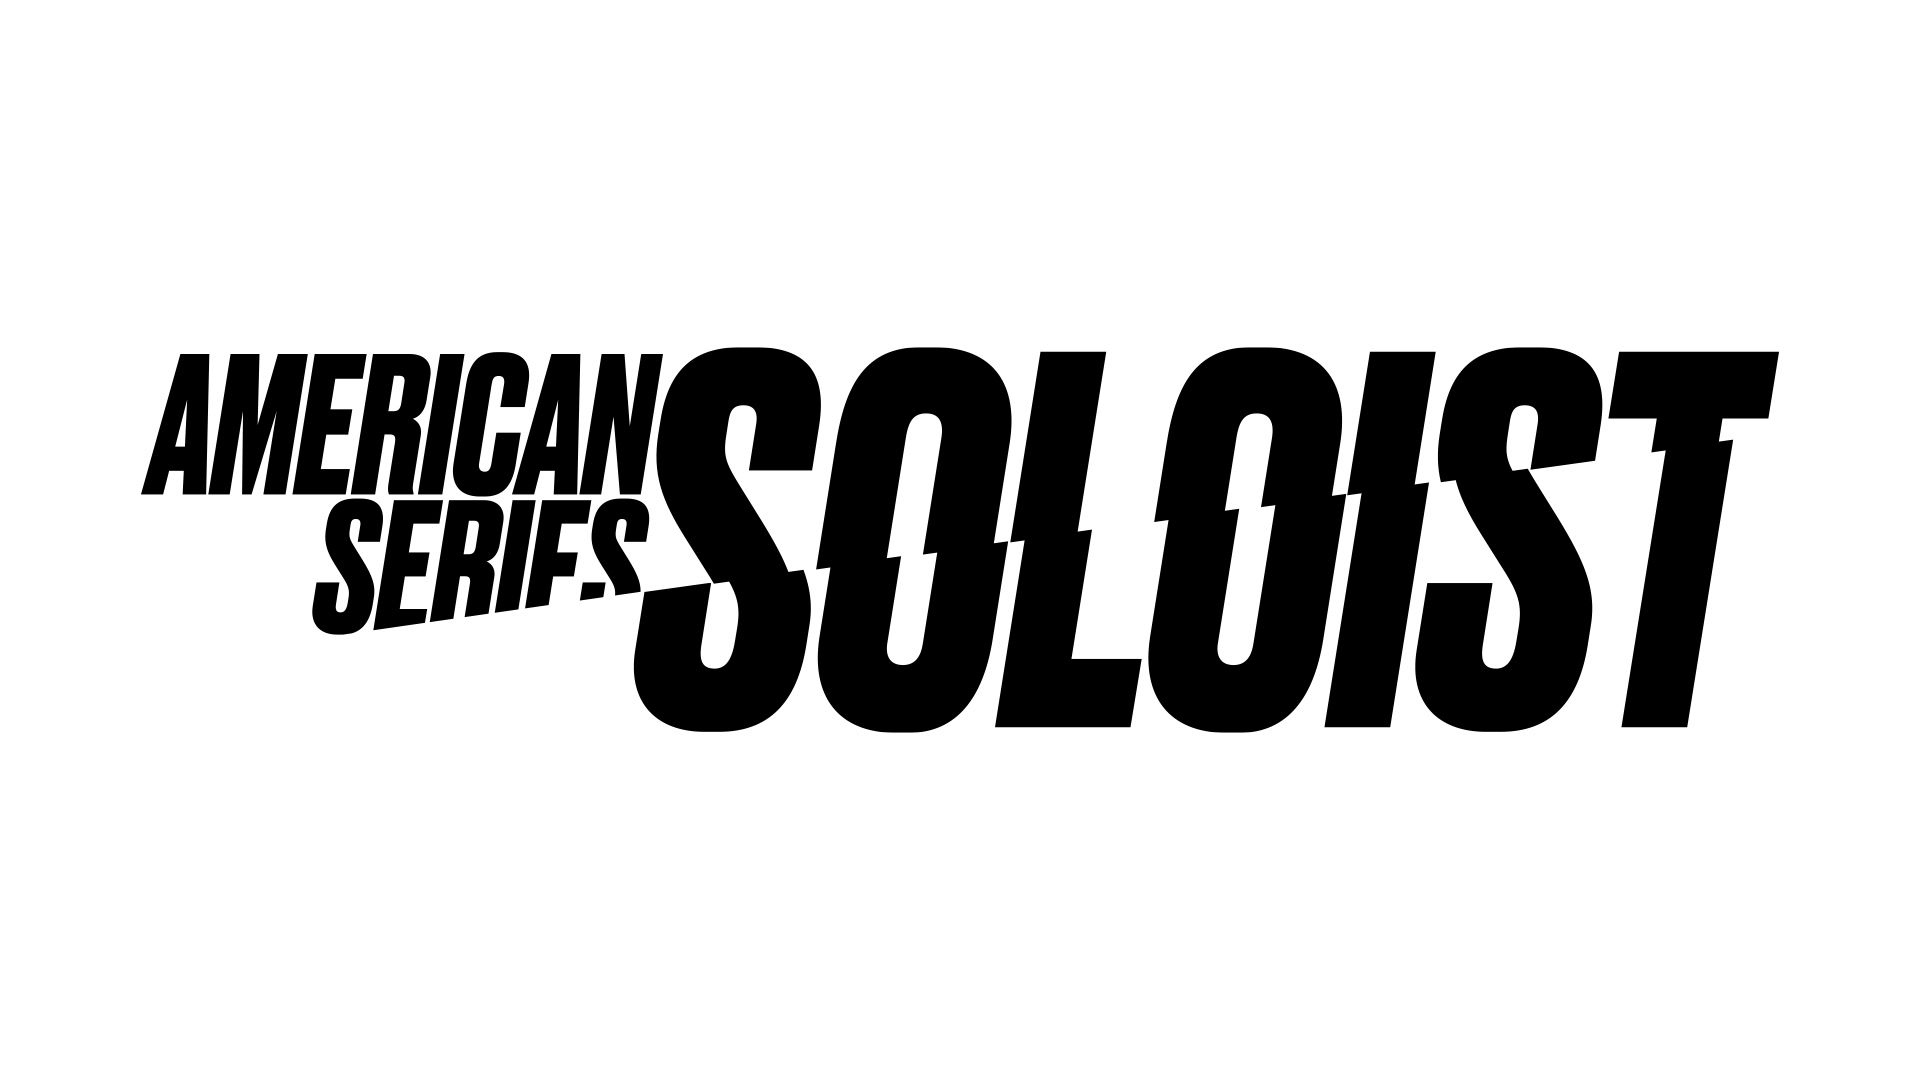 Jackson American Series Soloist campaign logo